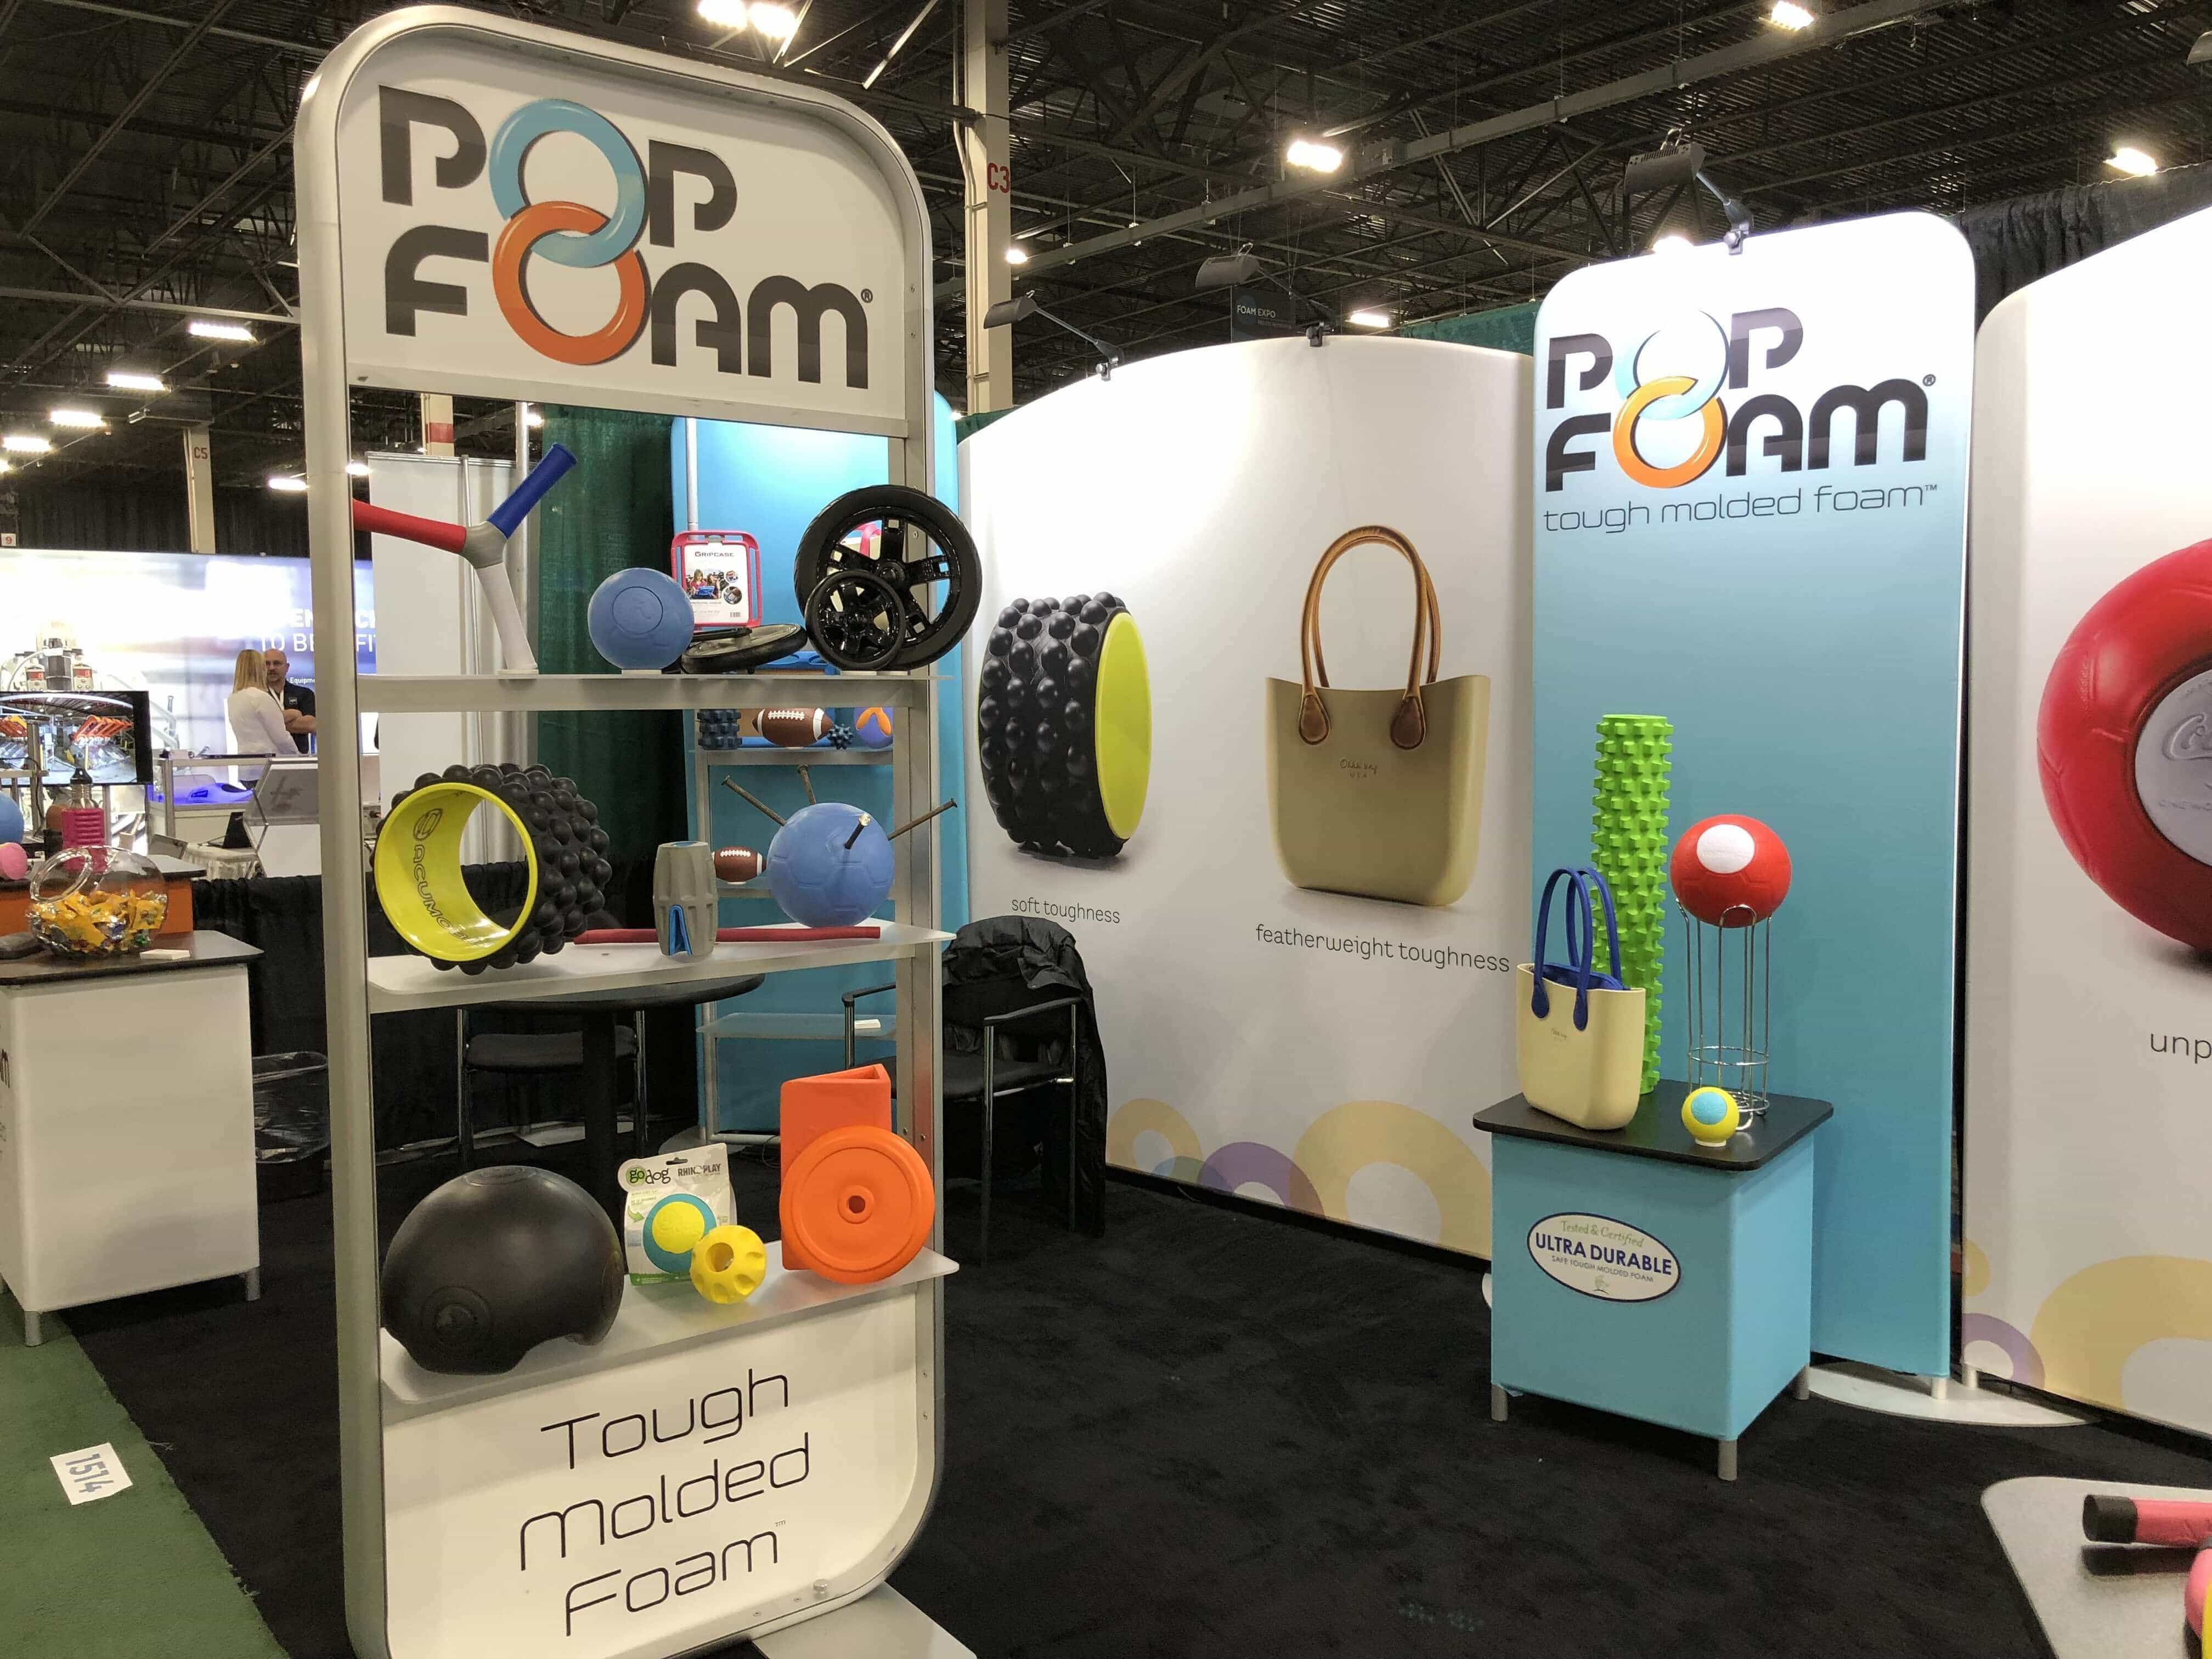 Designing with PopFoam - An Innovative Company